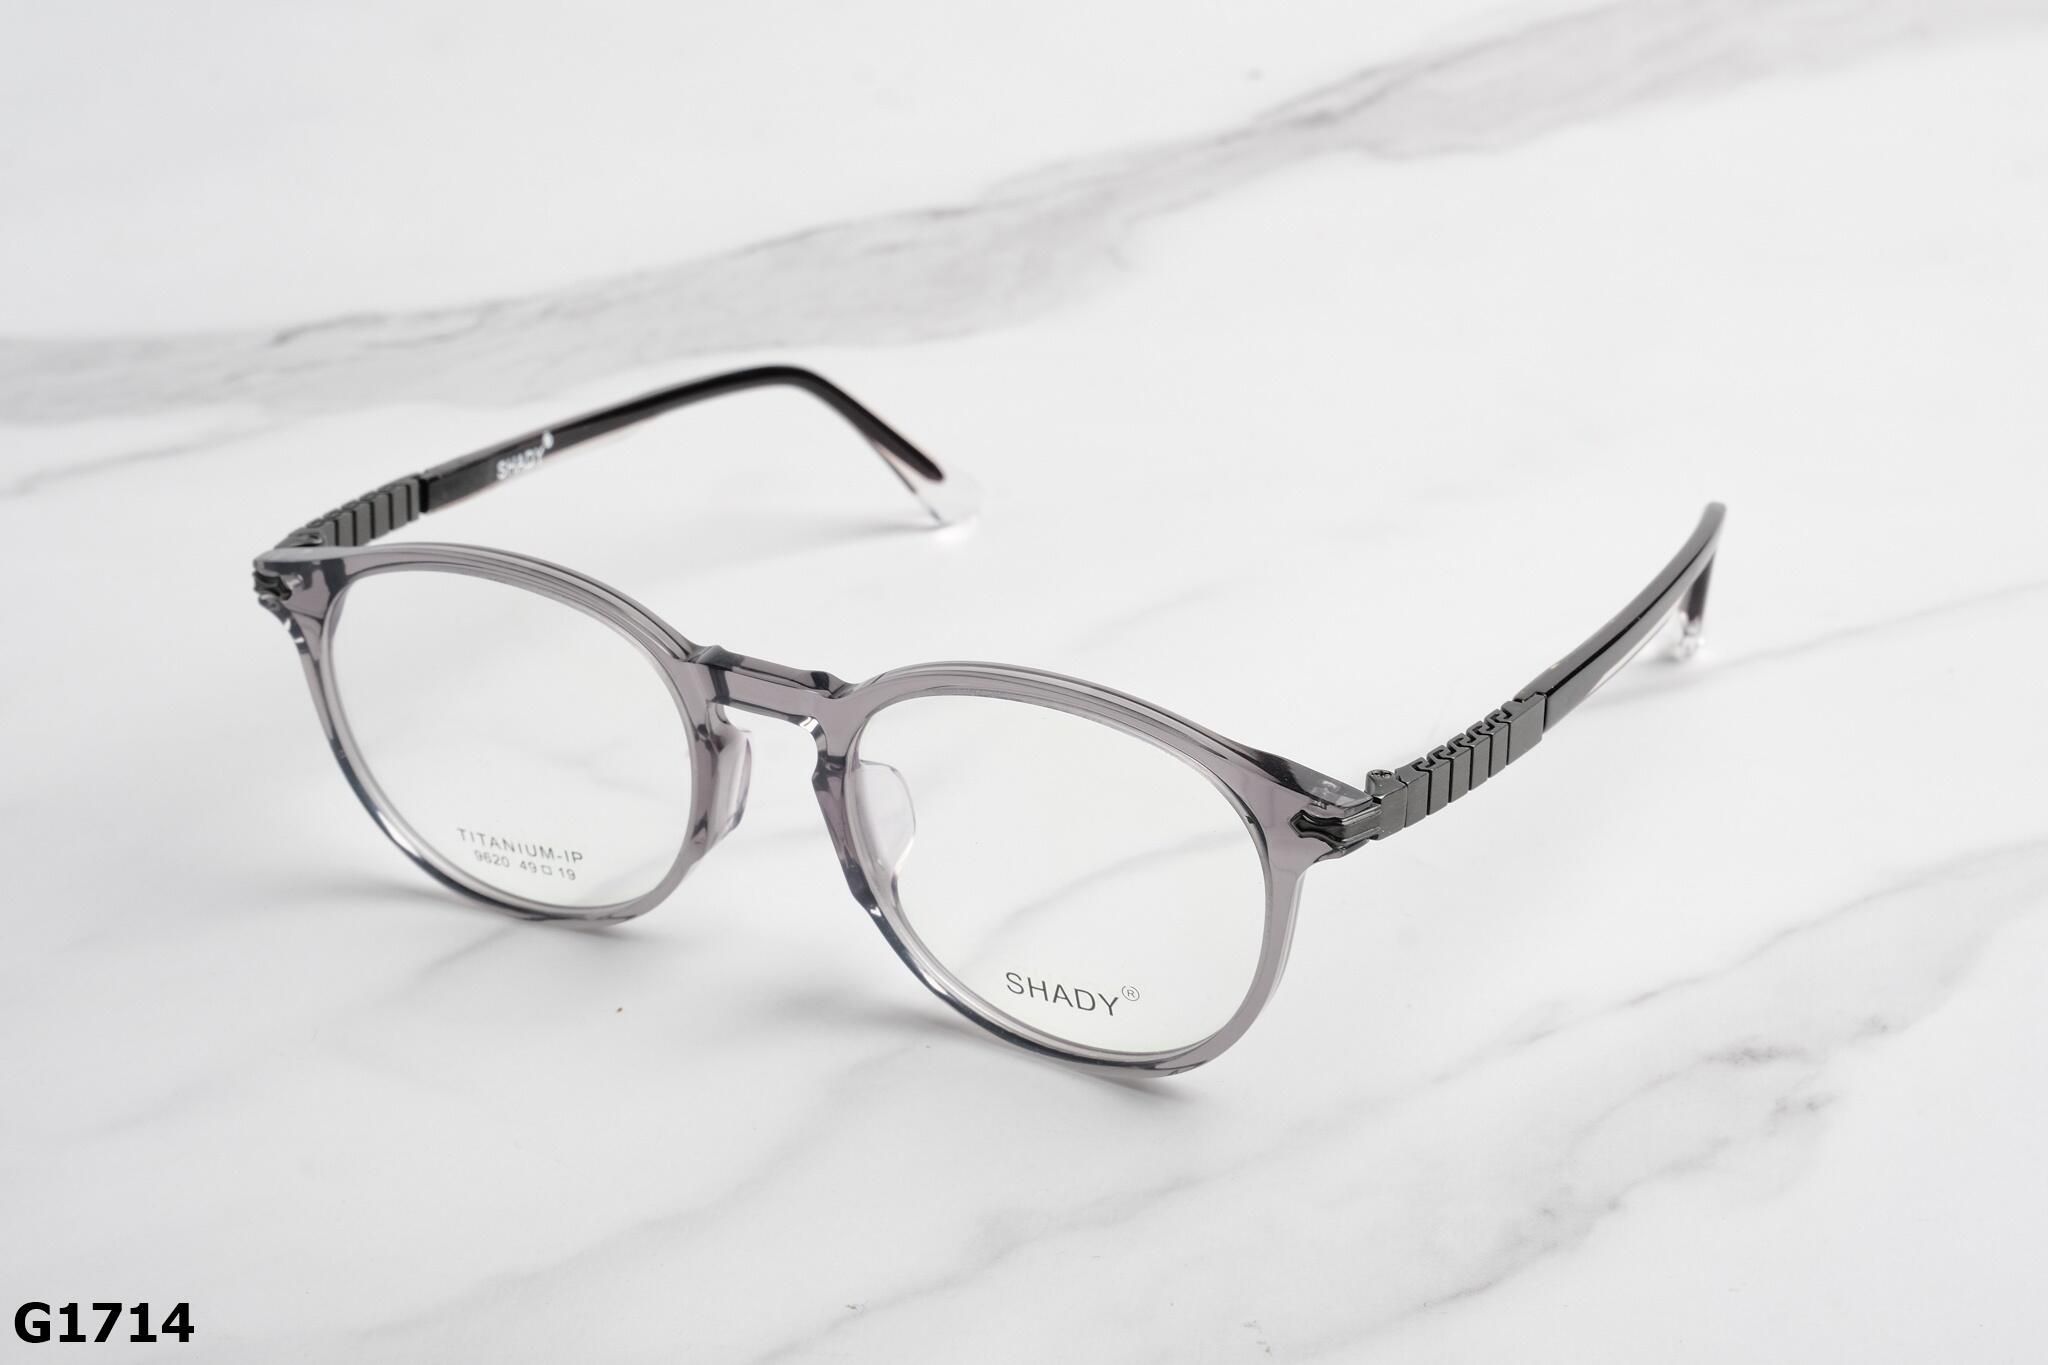  SHADY Eyewear - Glasses - G1714 